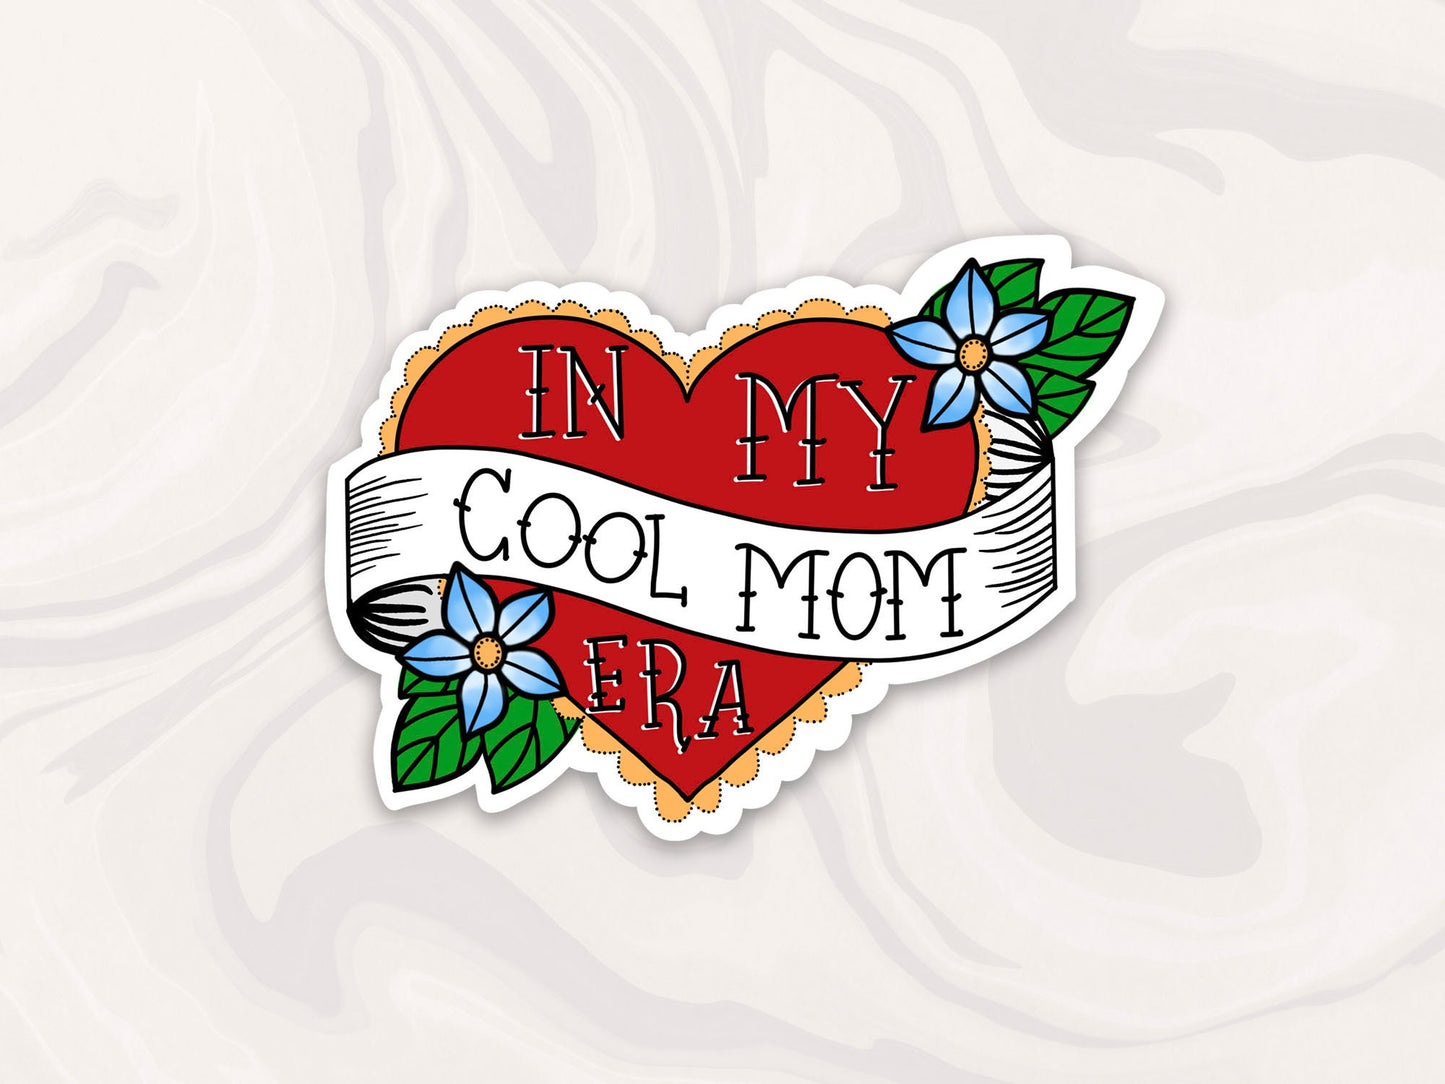 In My Cool Mom Era Sticker, American Traditional Tattoo Mom Heart Sticker, Waterproof Decal, Gift